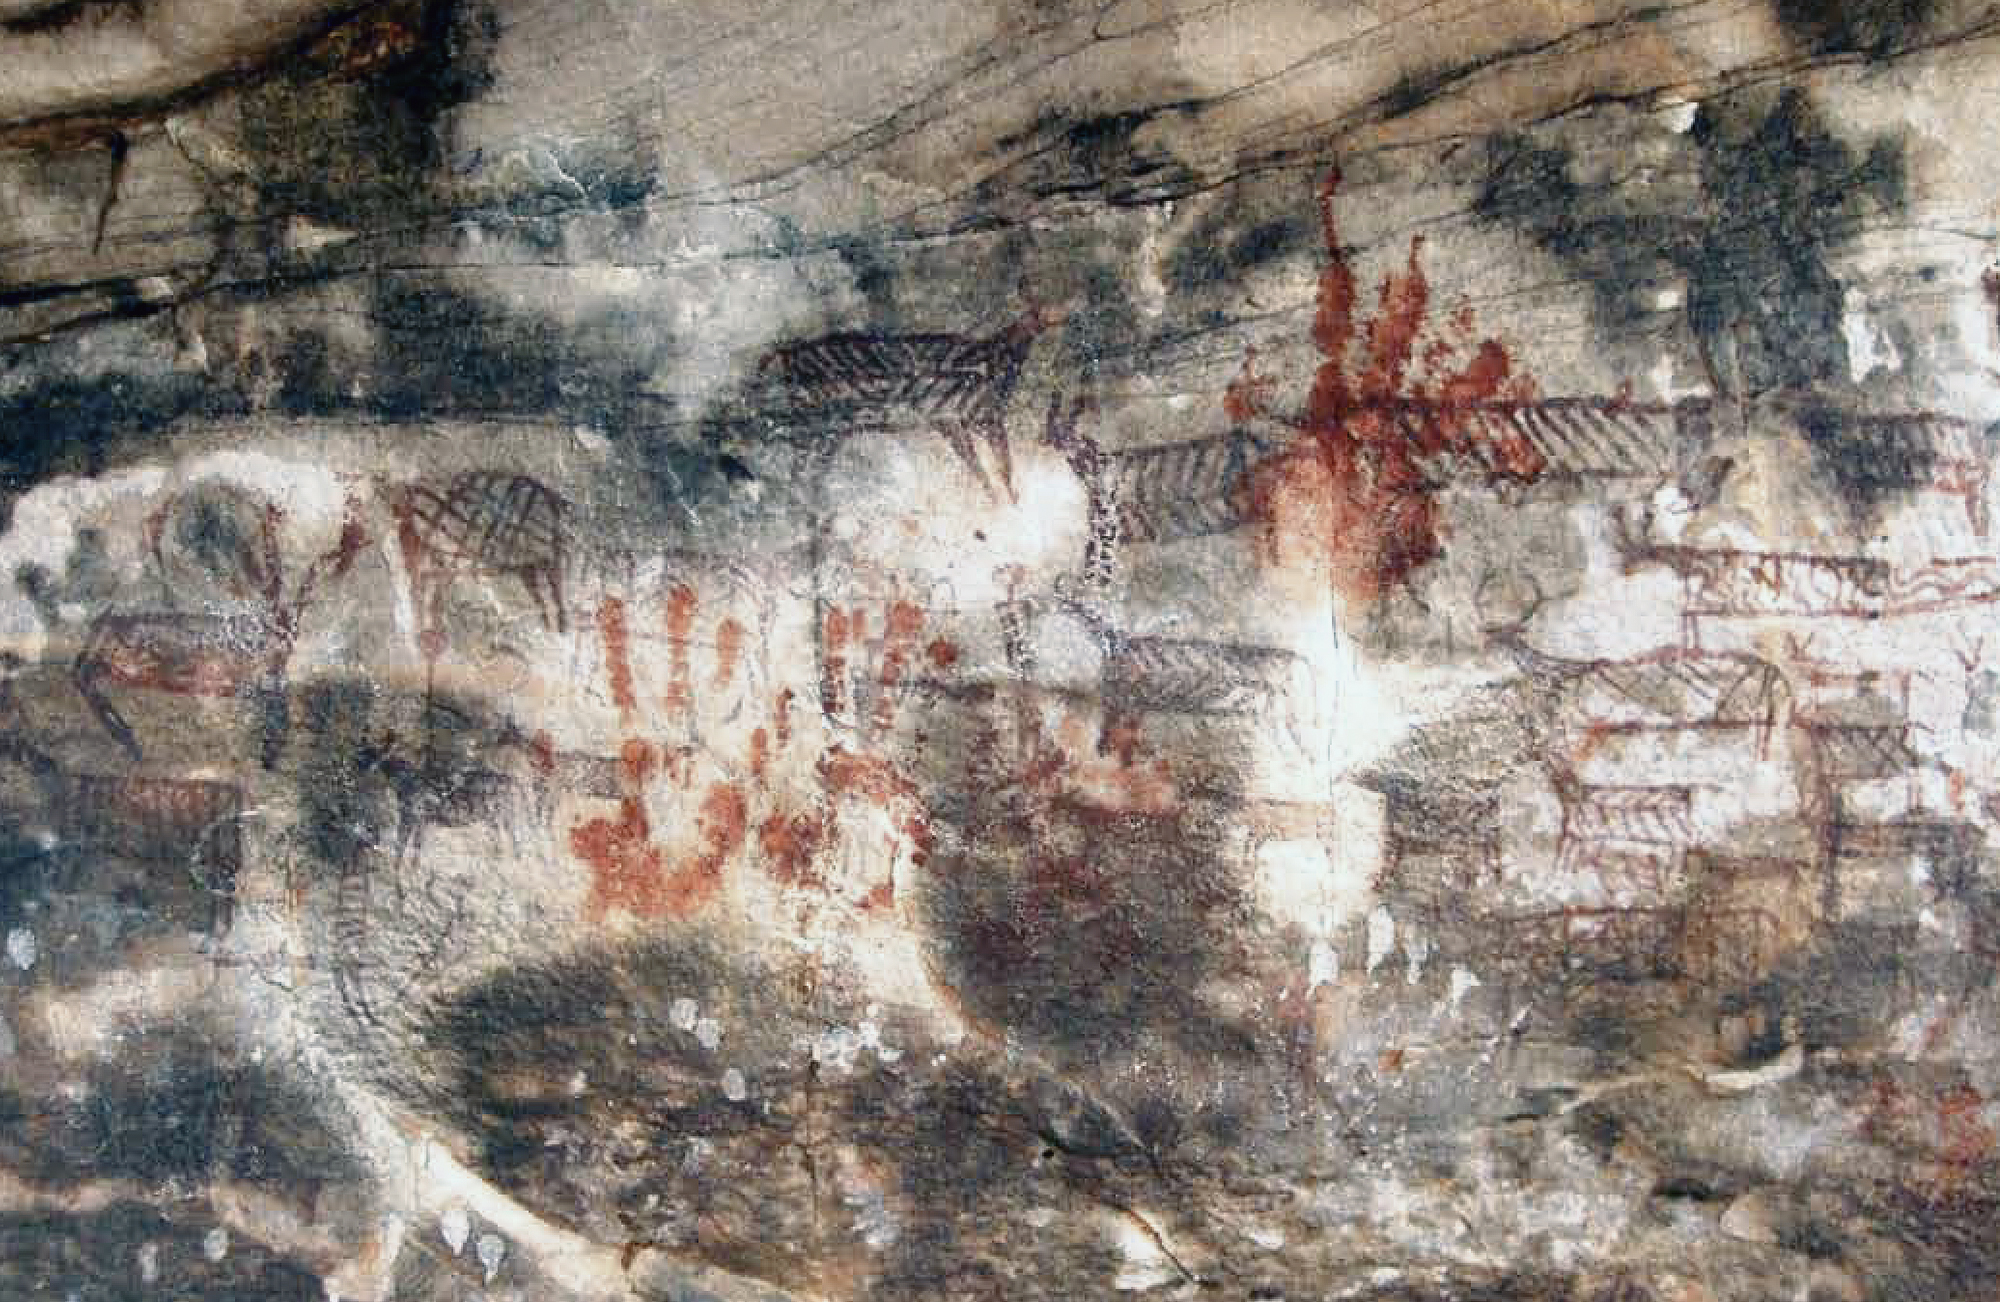 Jogi Ki Gufa shelters n°3, with red handprints superimposed upon Neolithic animals.